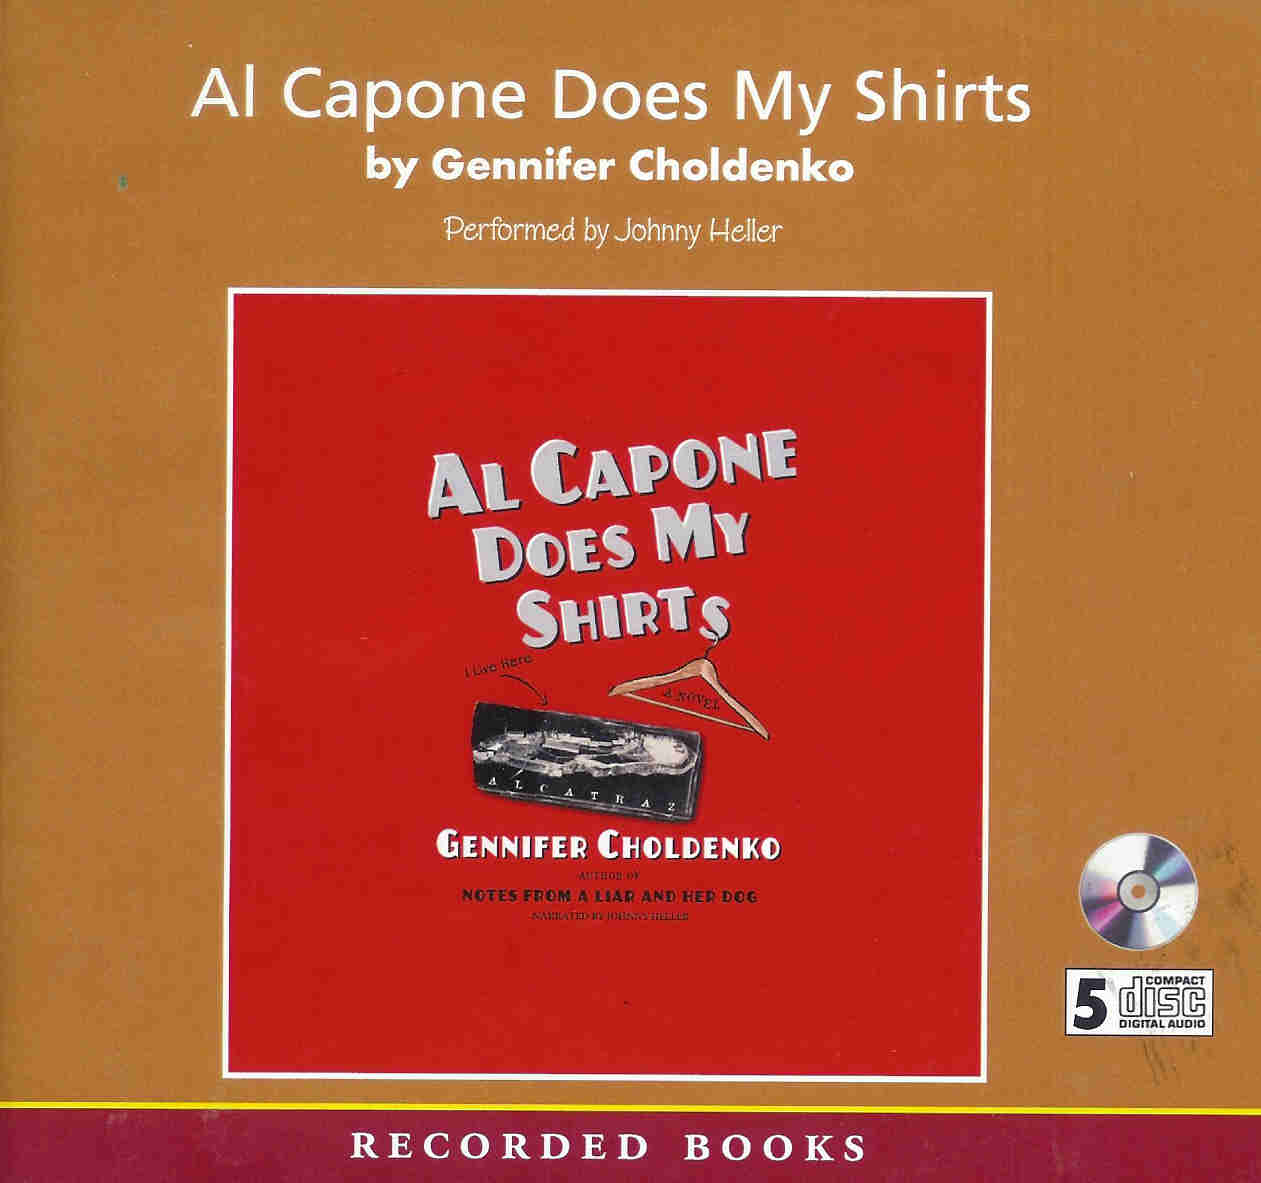 Al Capone does my shirts audio